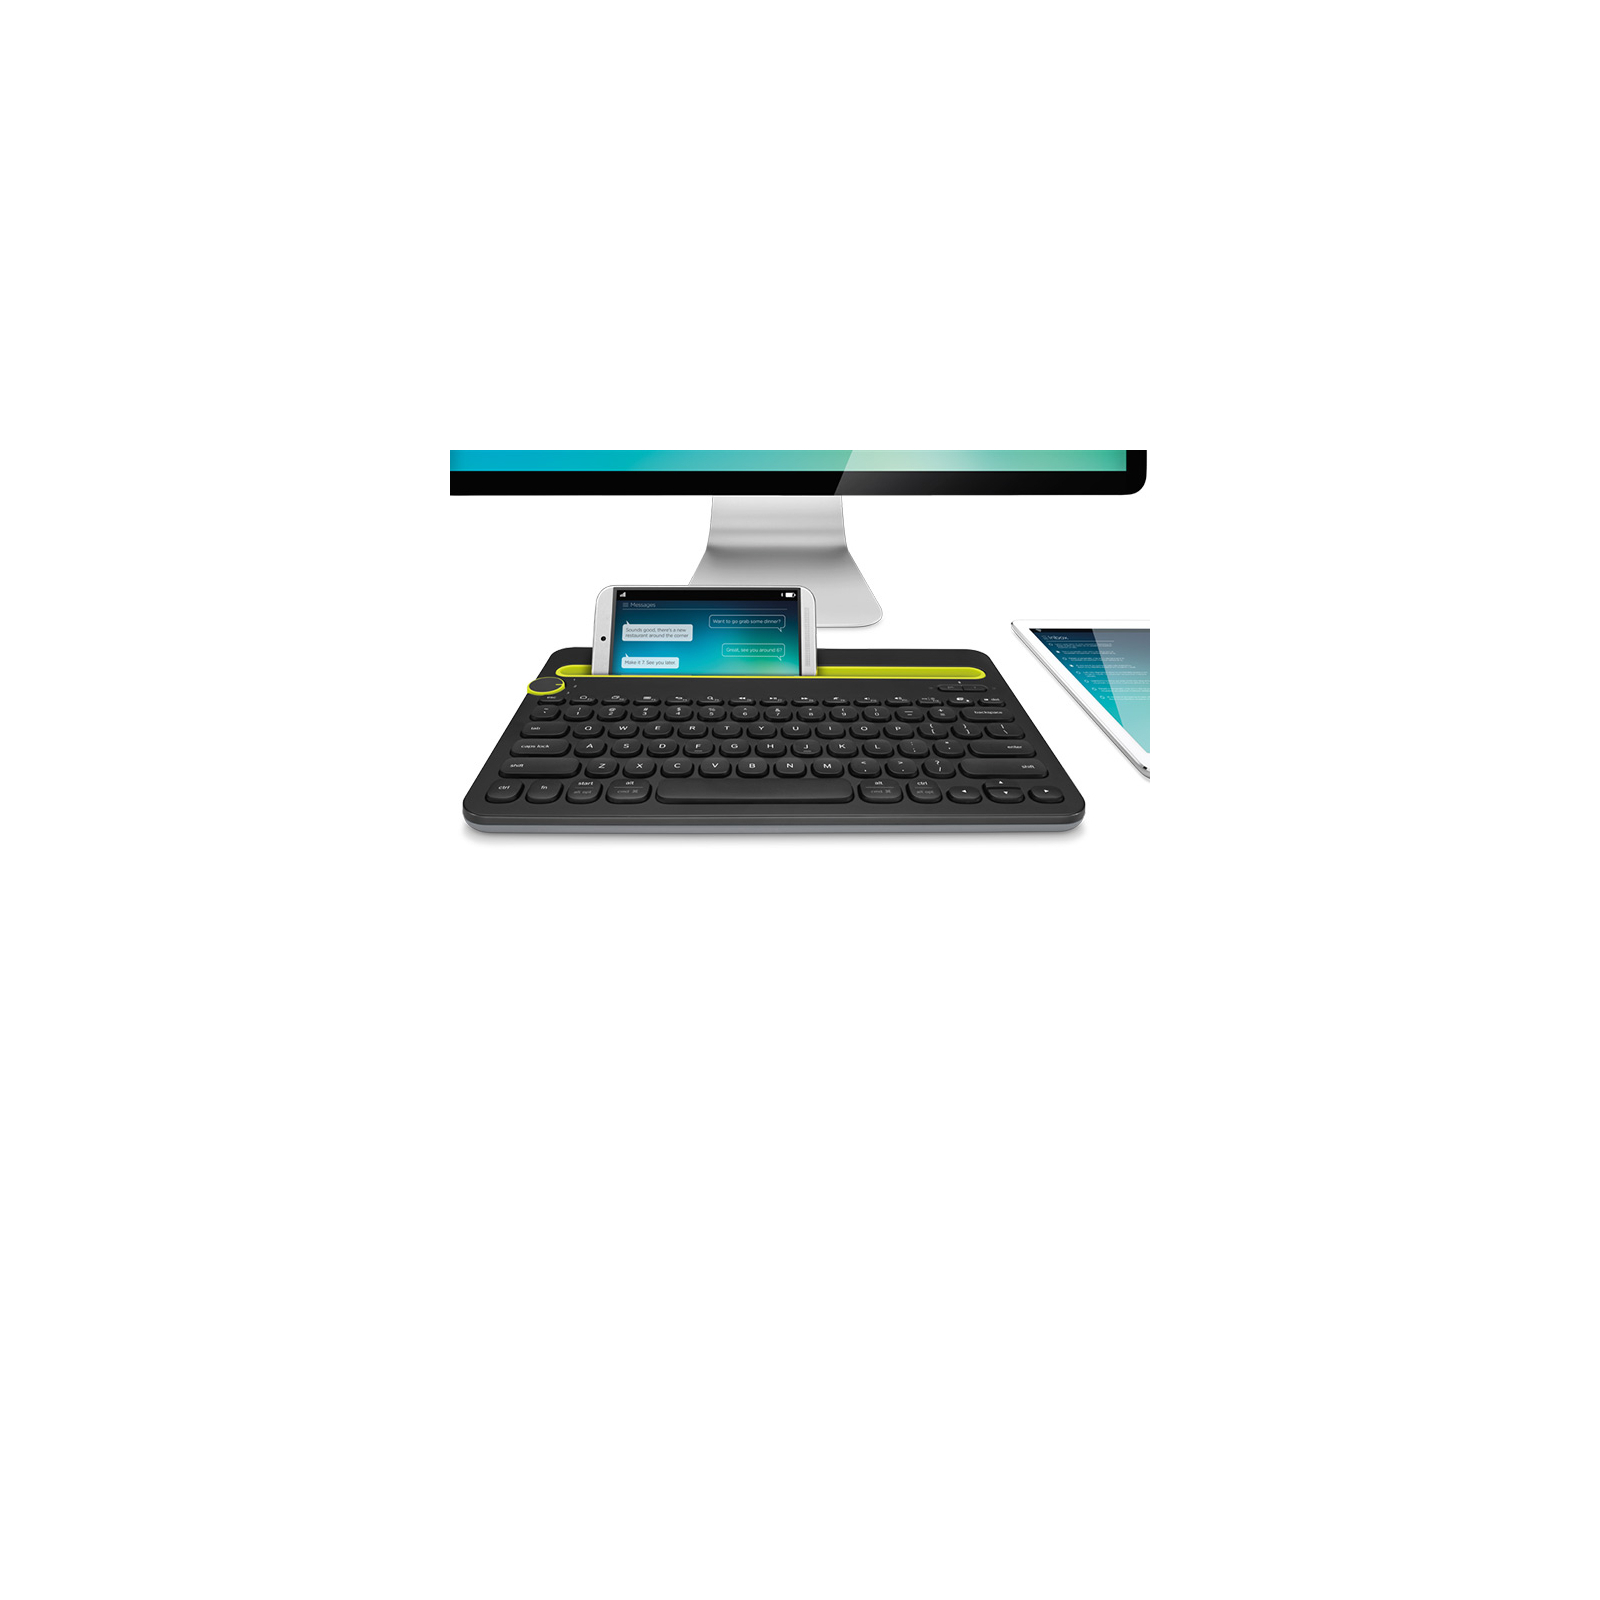 Клавиатура Logitech Bluetooth Multi-Device Keyboard K480 Black (920-006368) изображение 6